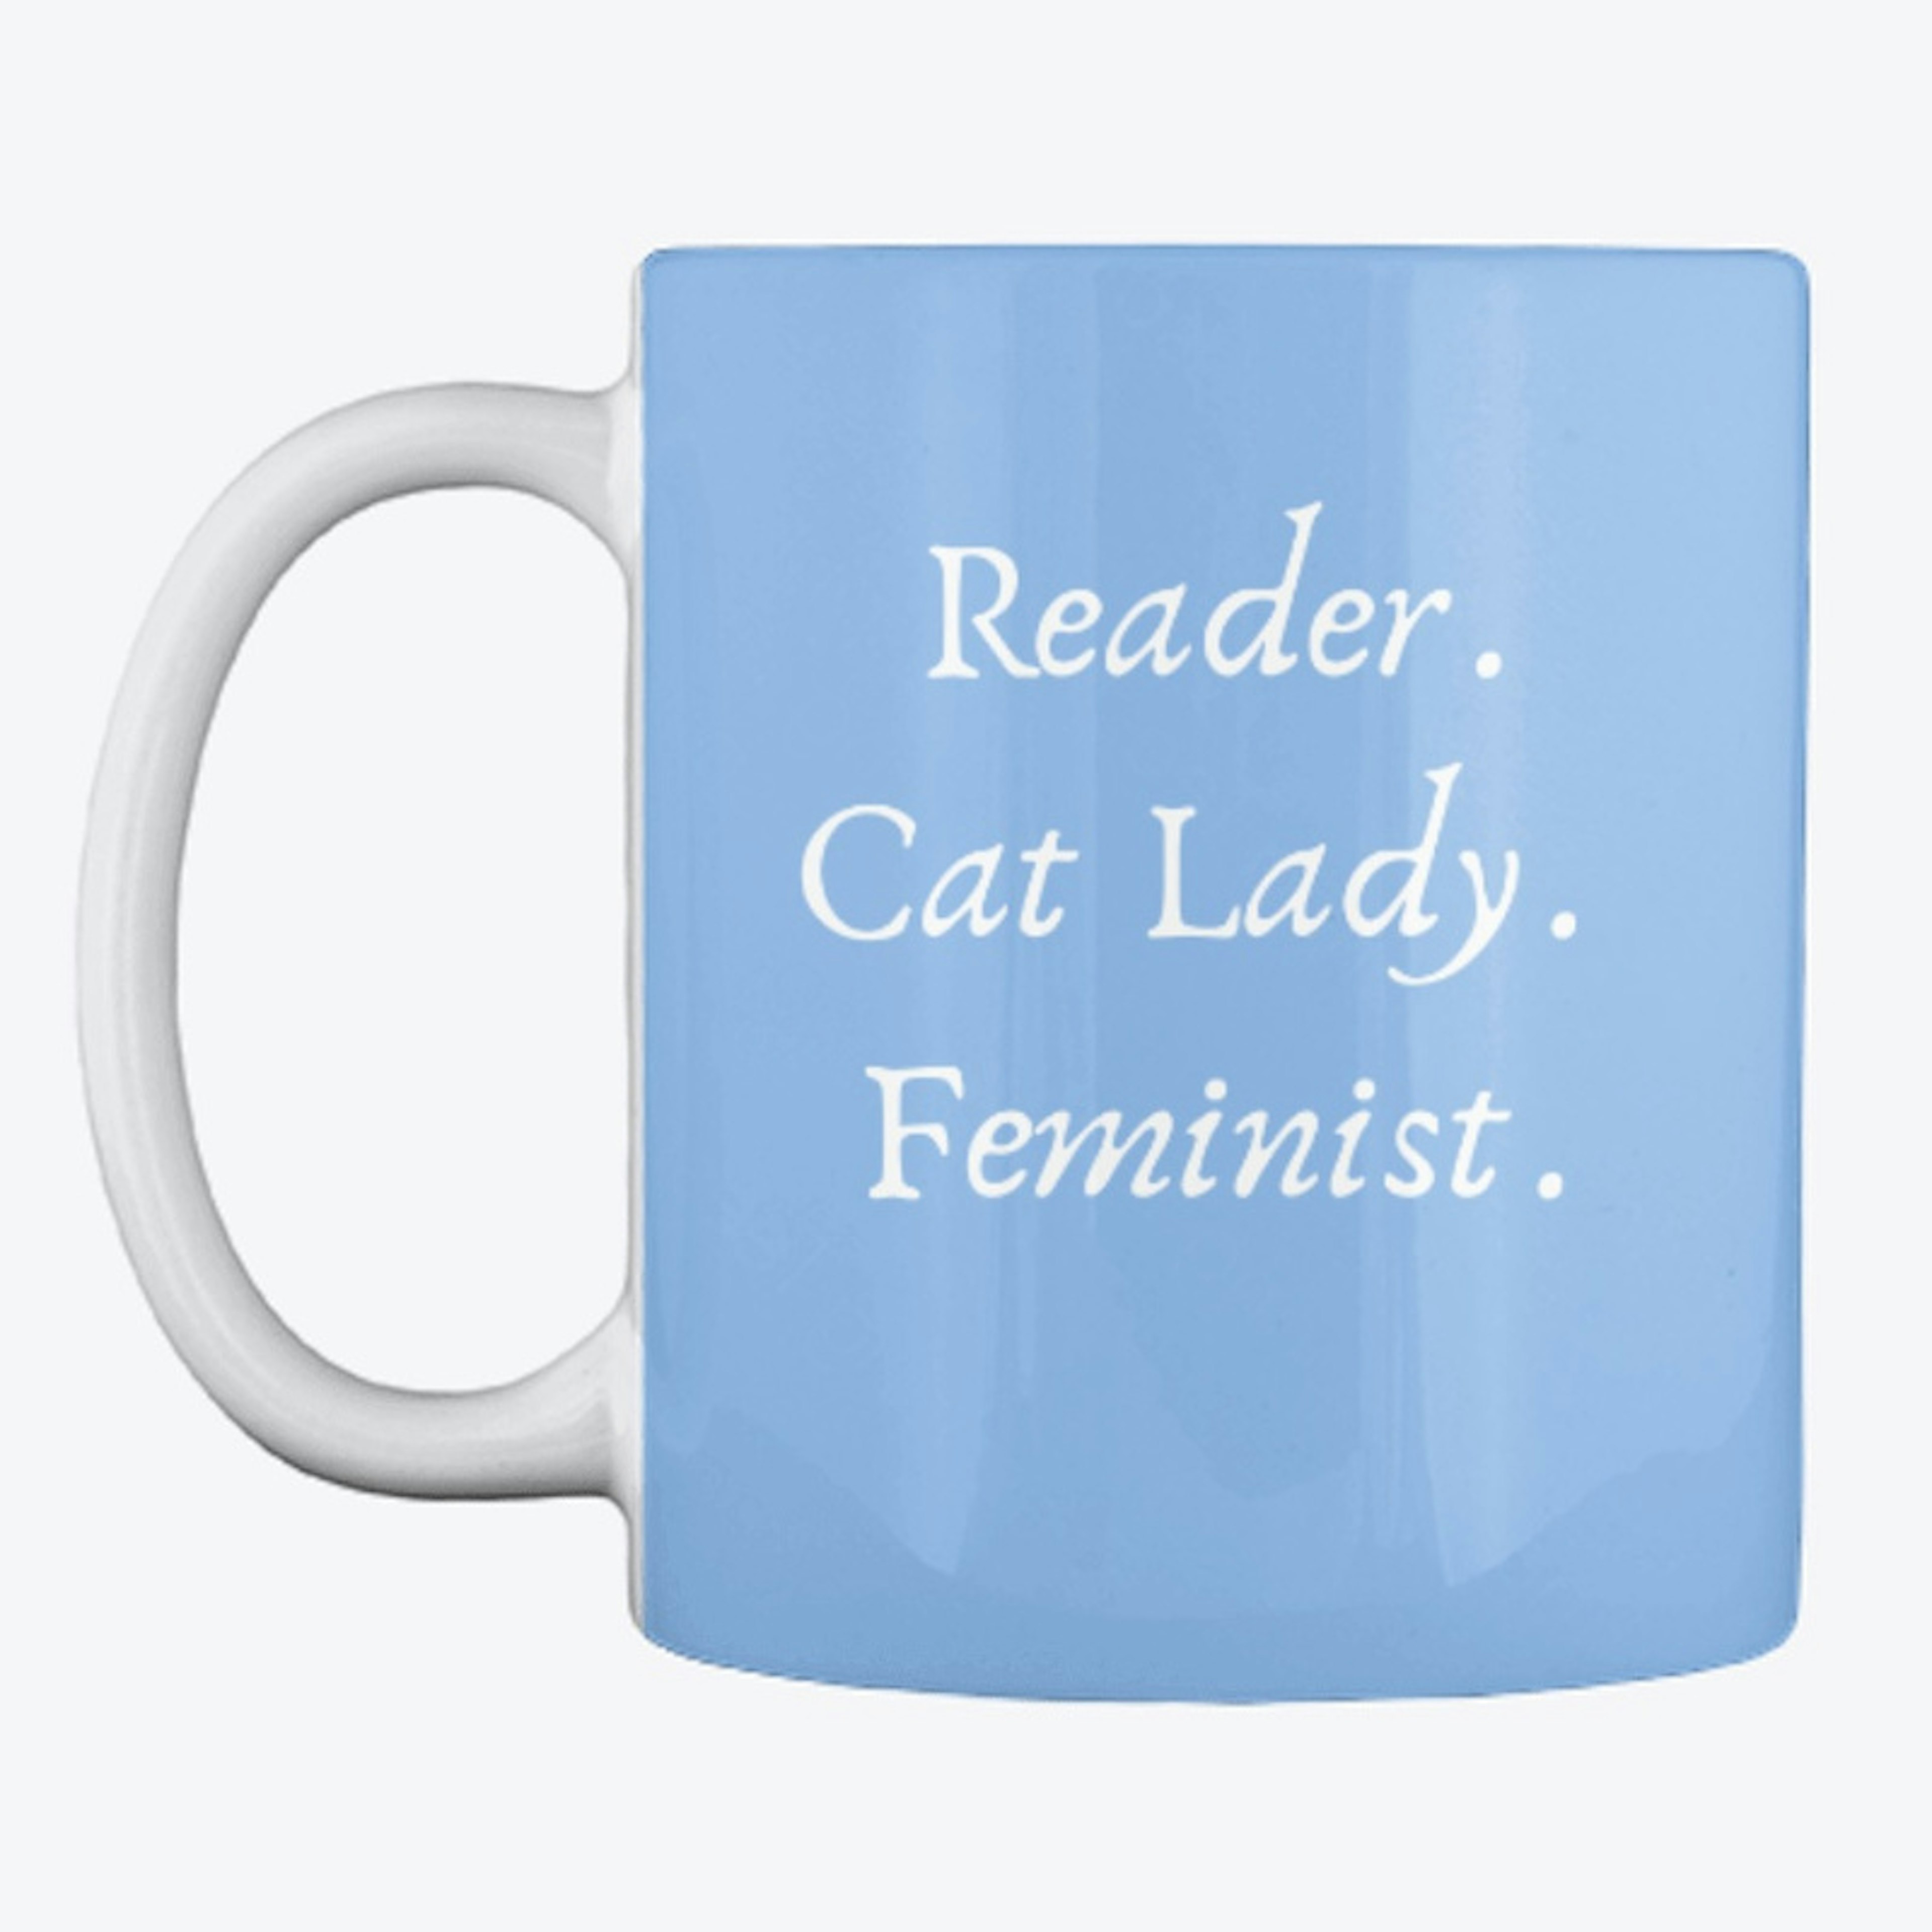 Reader. Cat Lady. Feminist.